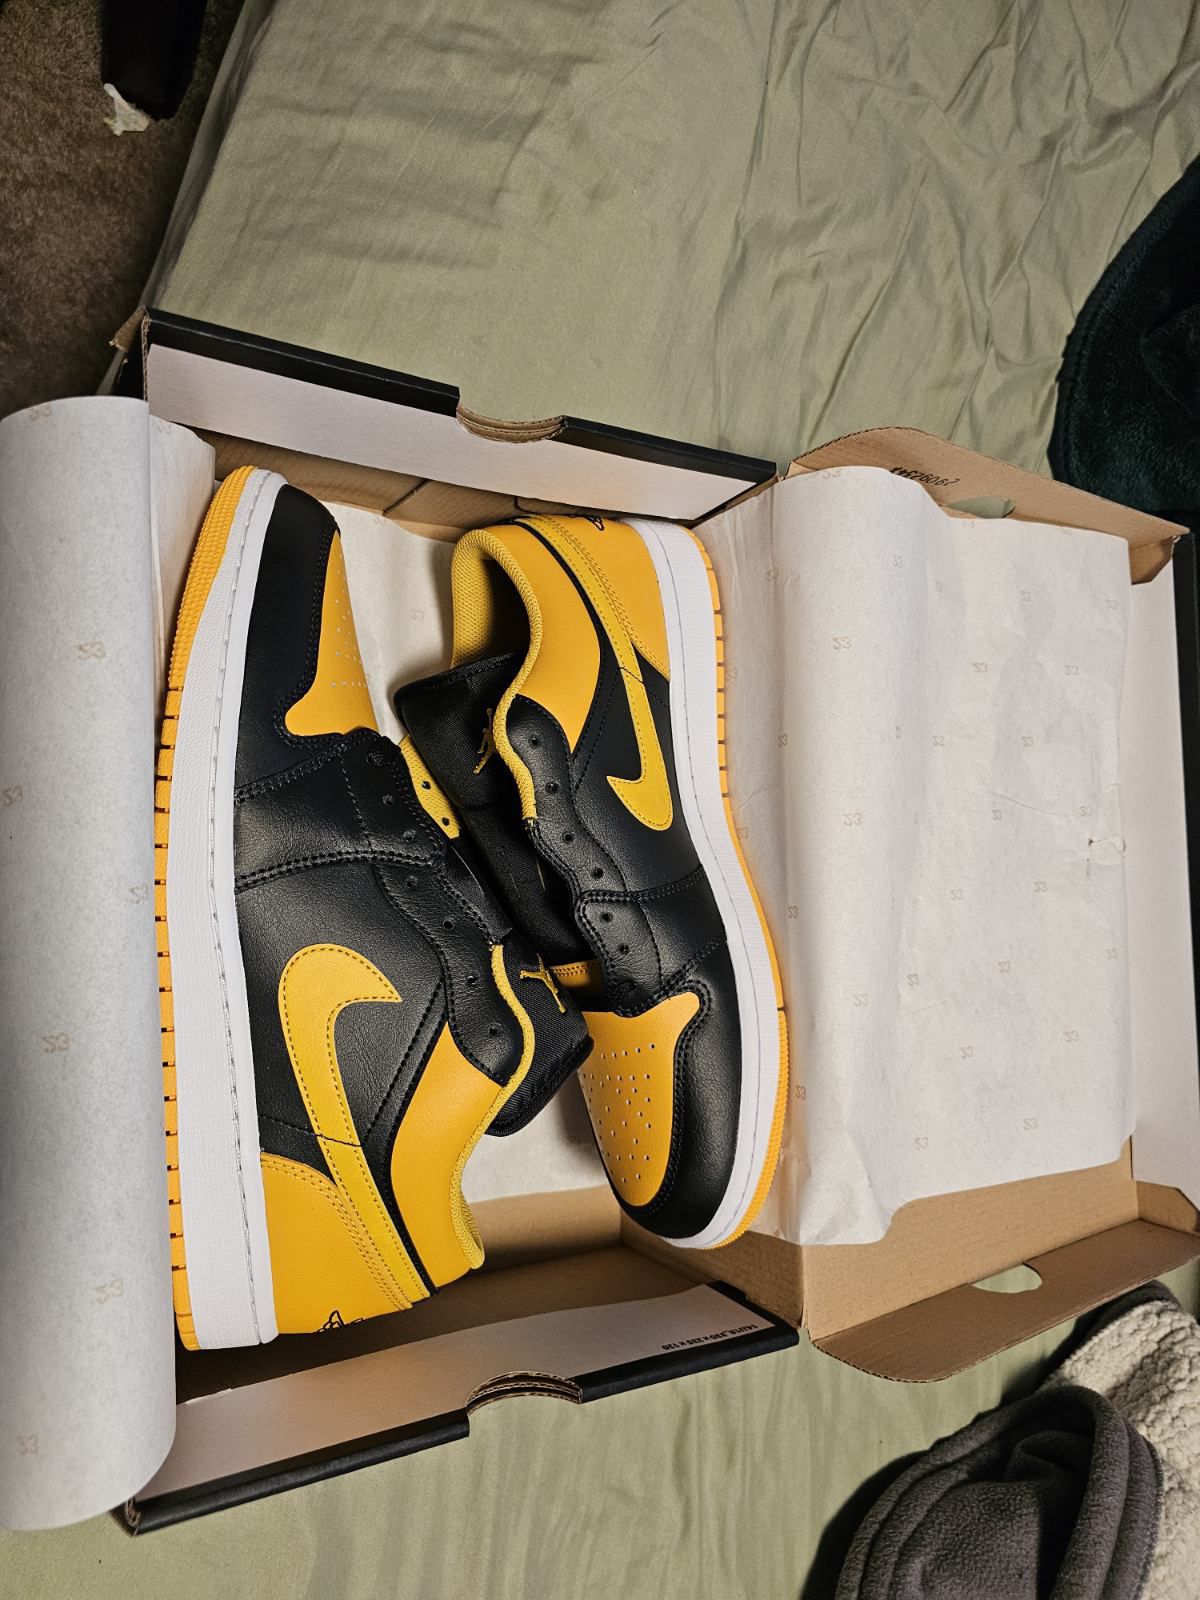 Brand New Jordan 1’s Low. Size 11. 